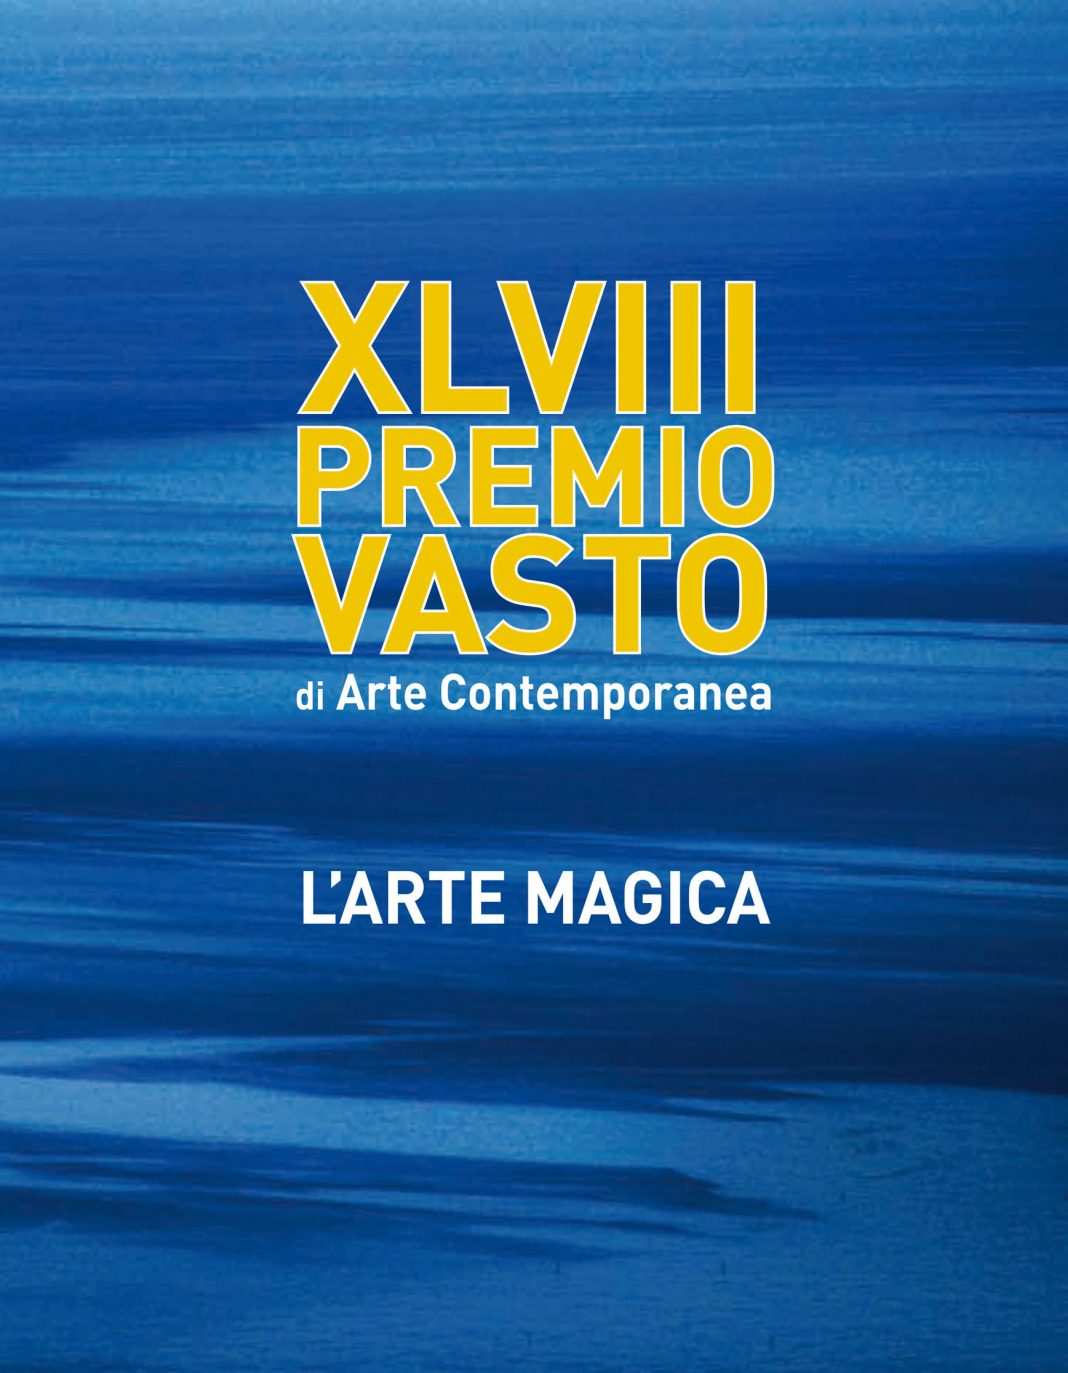 XLVIII Premio Vastohttps://www.exibart.com/repository/media/eventi/2015/07/xlviii-premio-vasto-3-1068x1373.jpg